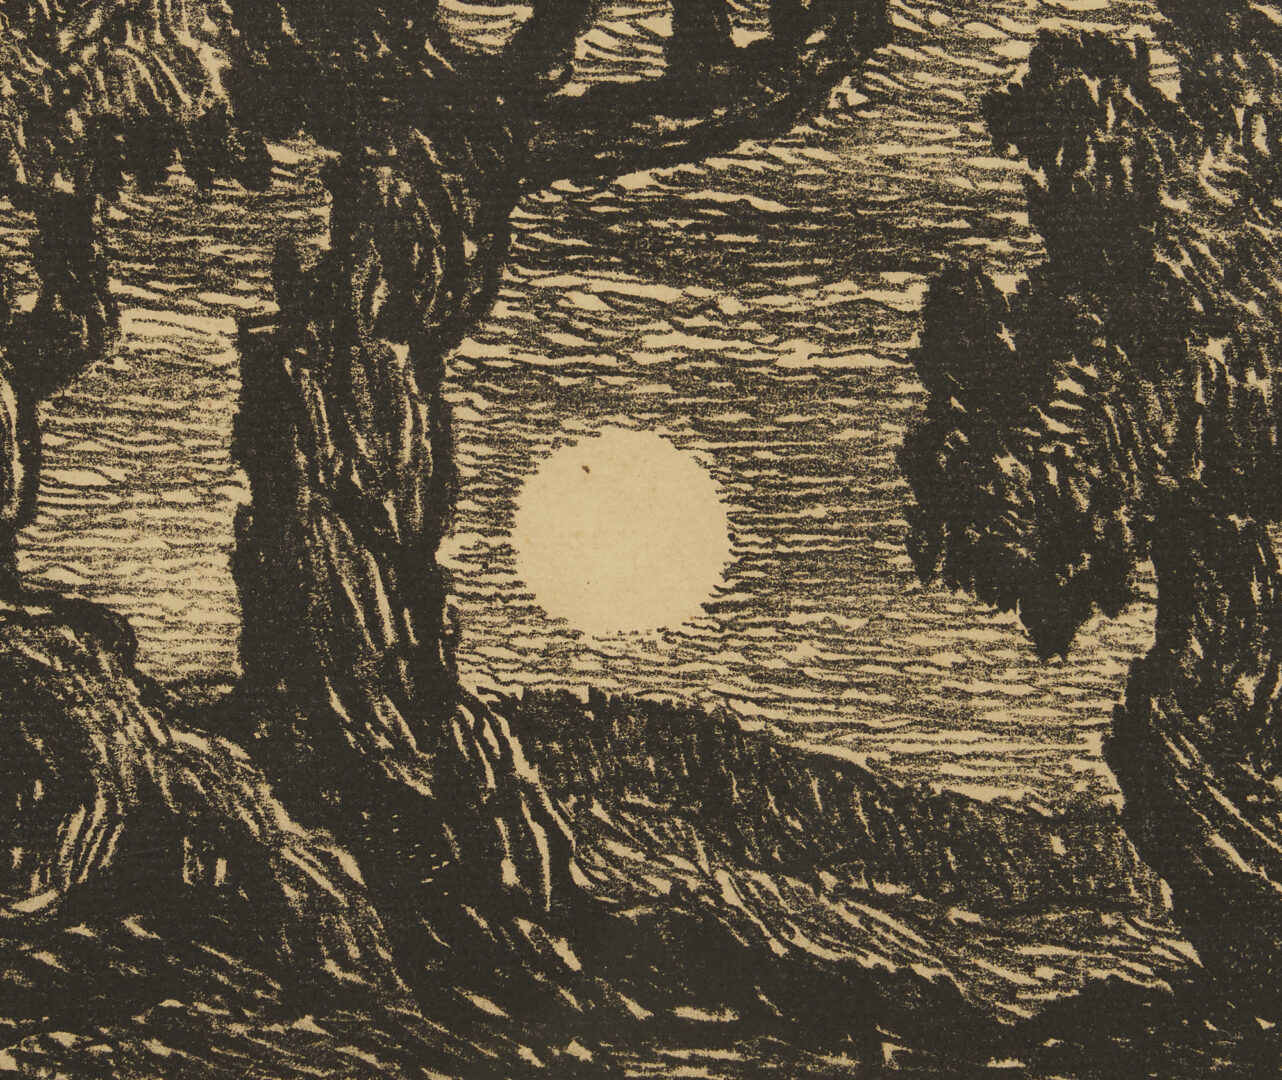 Lot 485: Birger Sandzen Lithograph, Moonrise in the Foothills, 1923